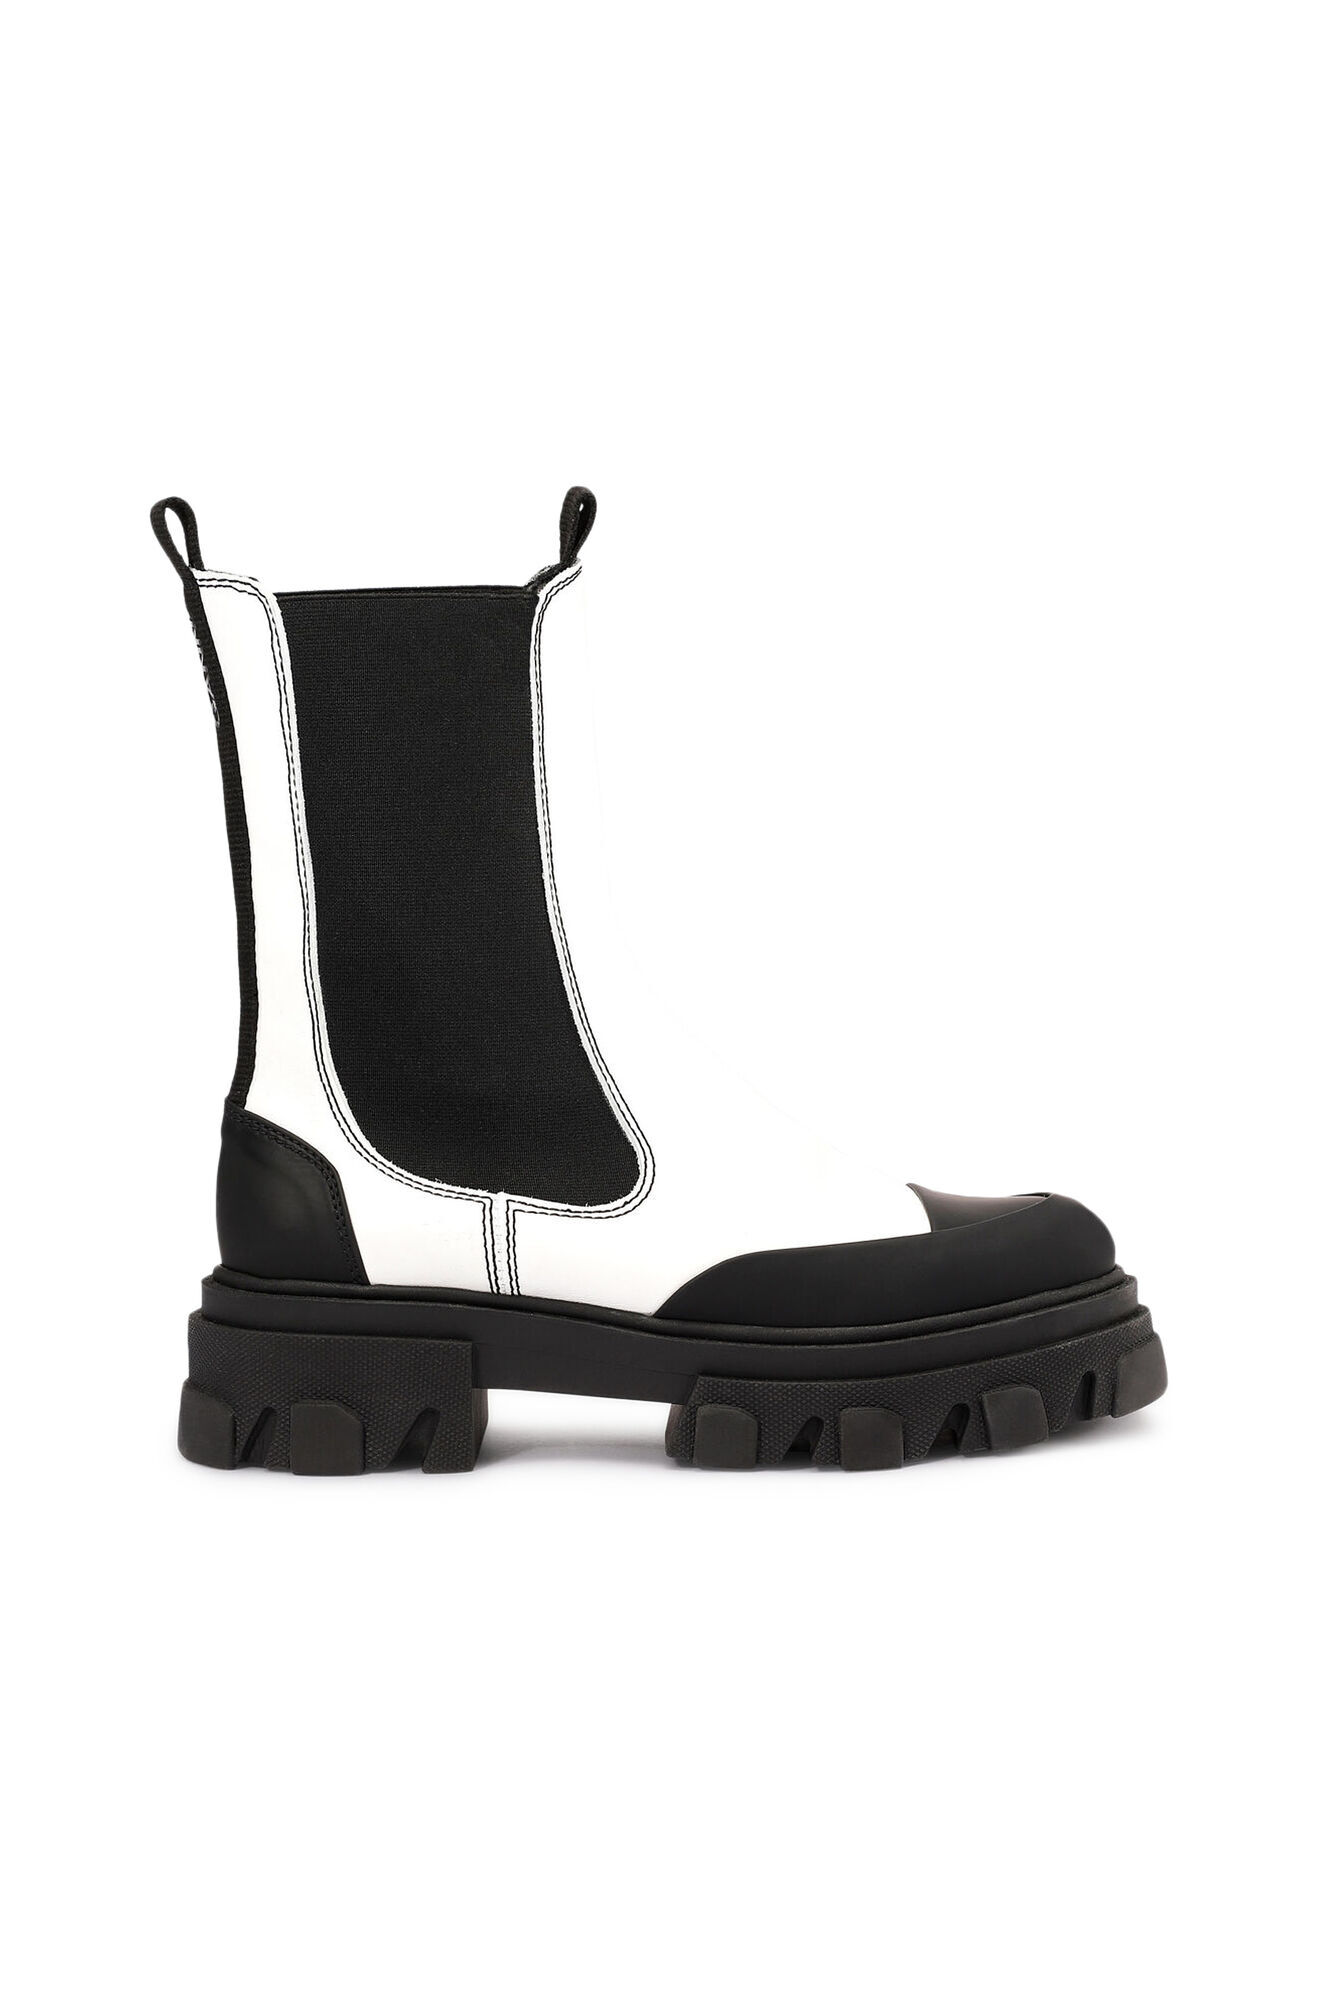 Melady Fashion Slip On Chelsea Boots Flat